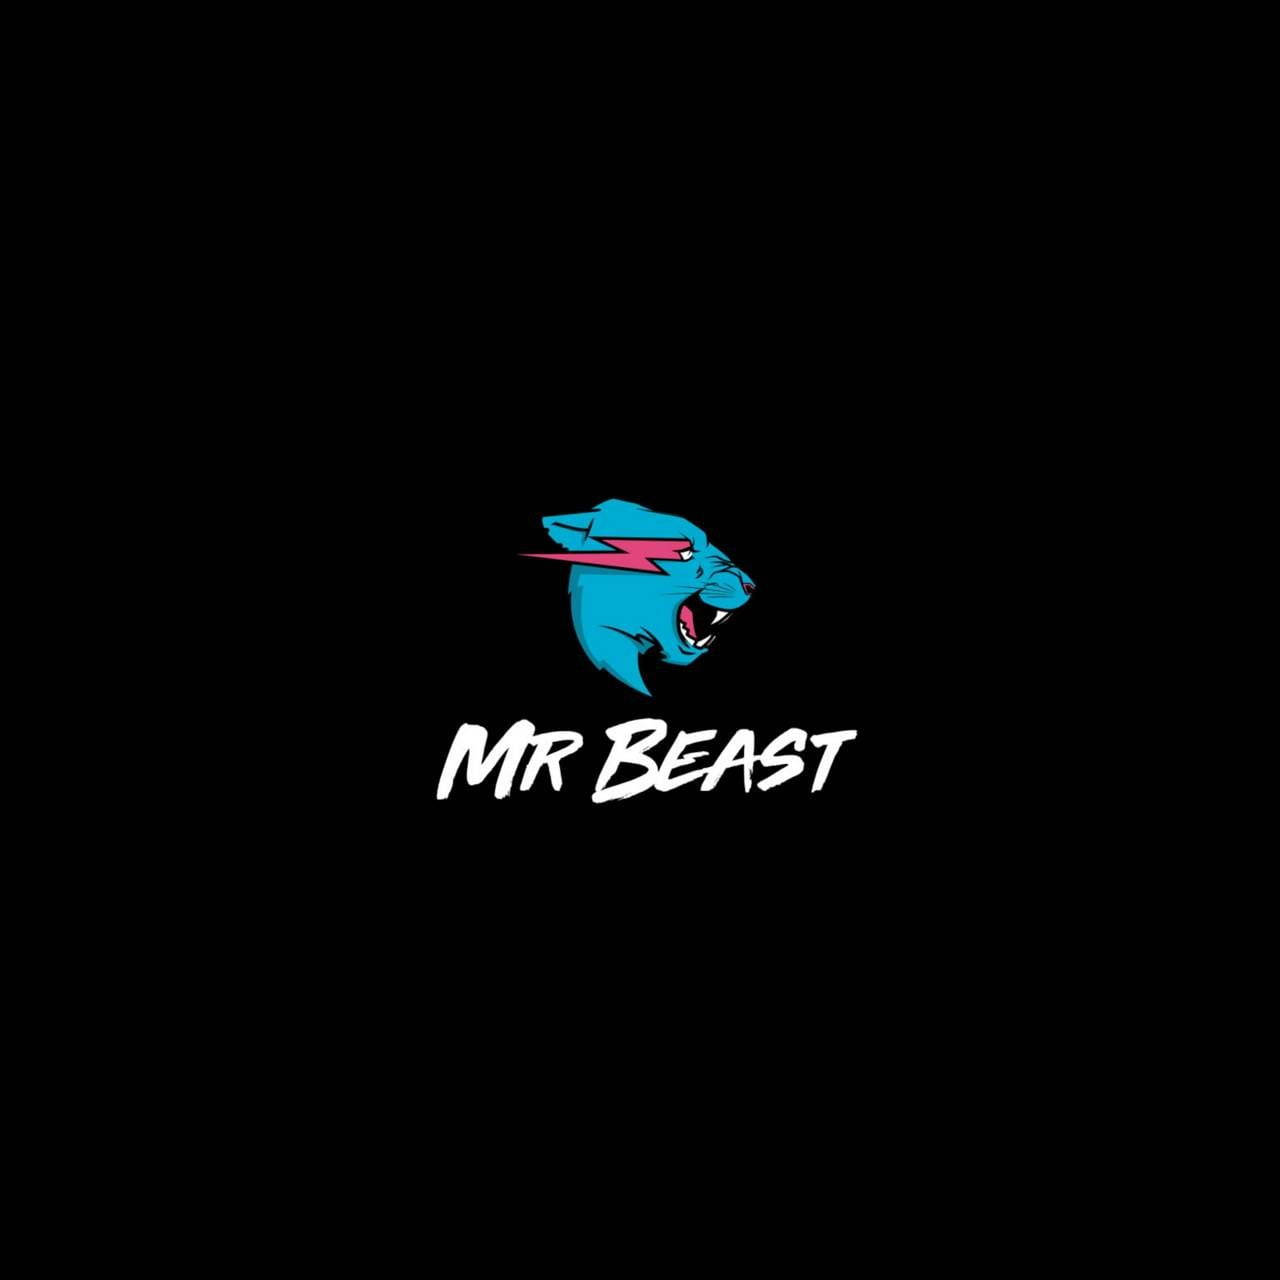 Mr Beast Logo And Wordmark In Black Wallpaper